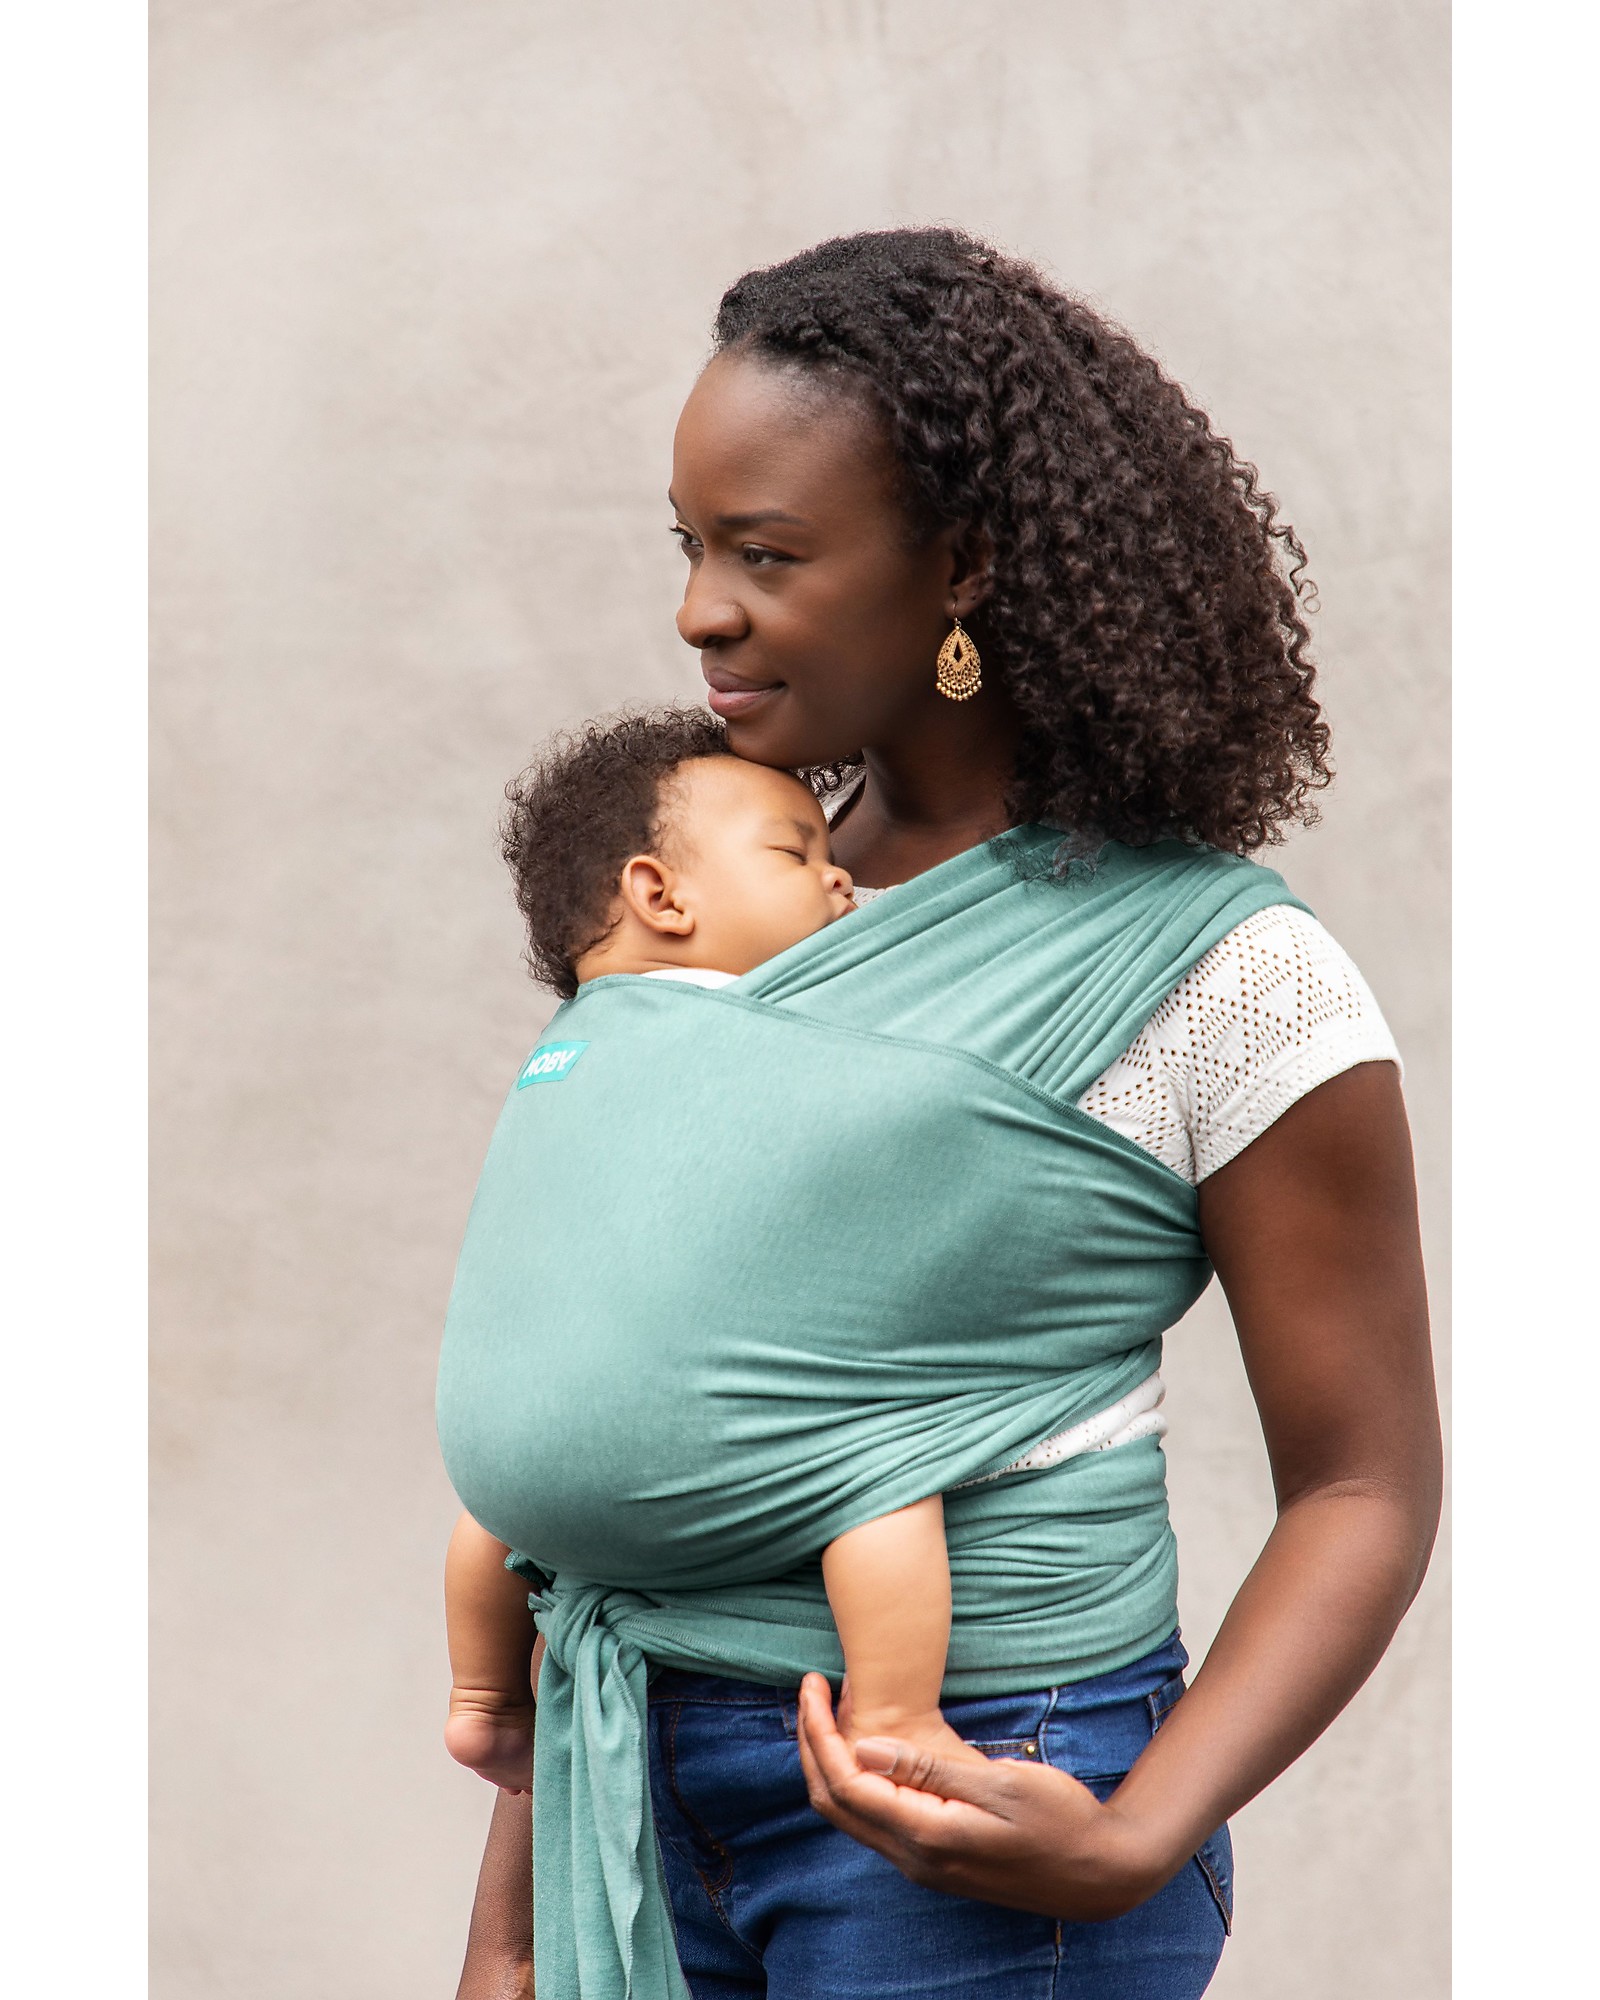 Leggero bambino Sling elastico Wrap Carrier Pouch morbida e l'allattamento al seno Covers 